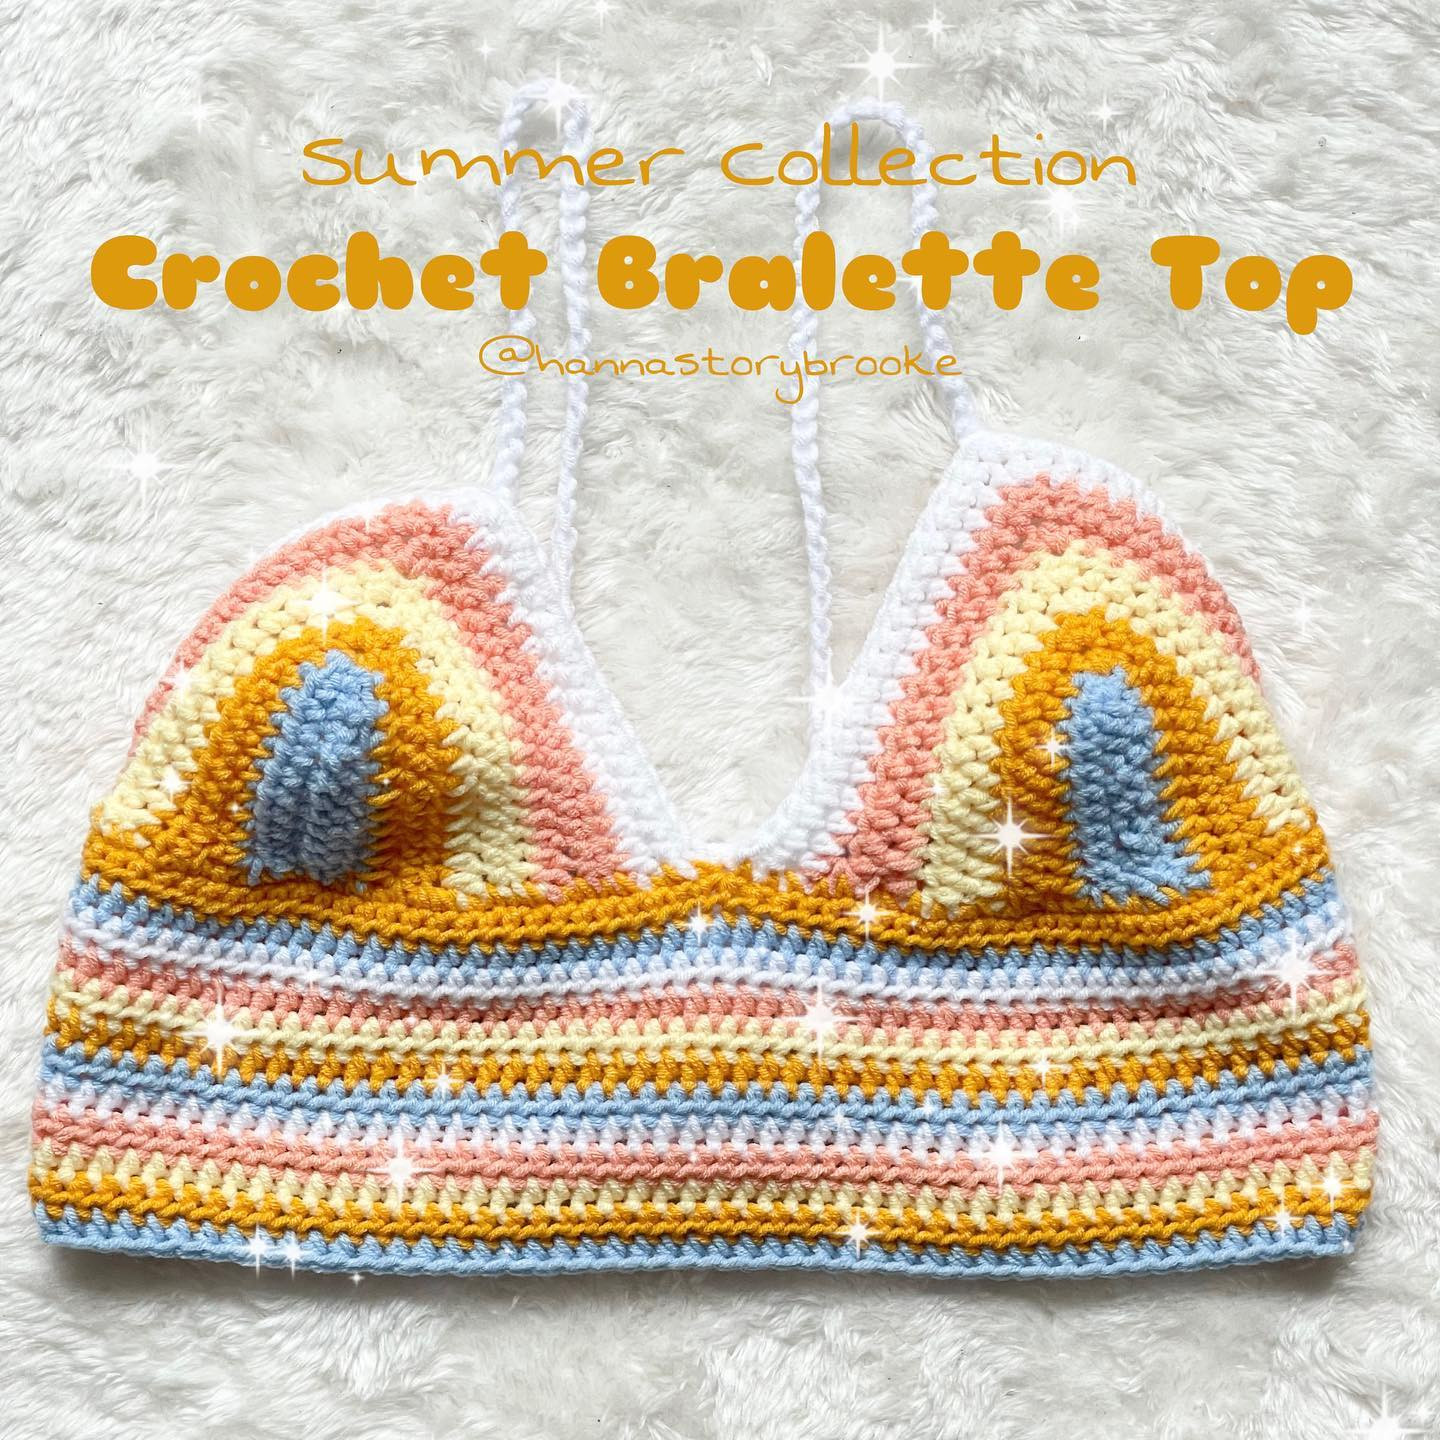 Crochet Bralette Top